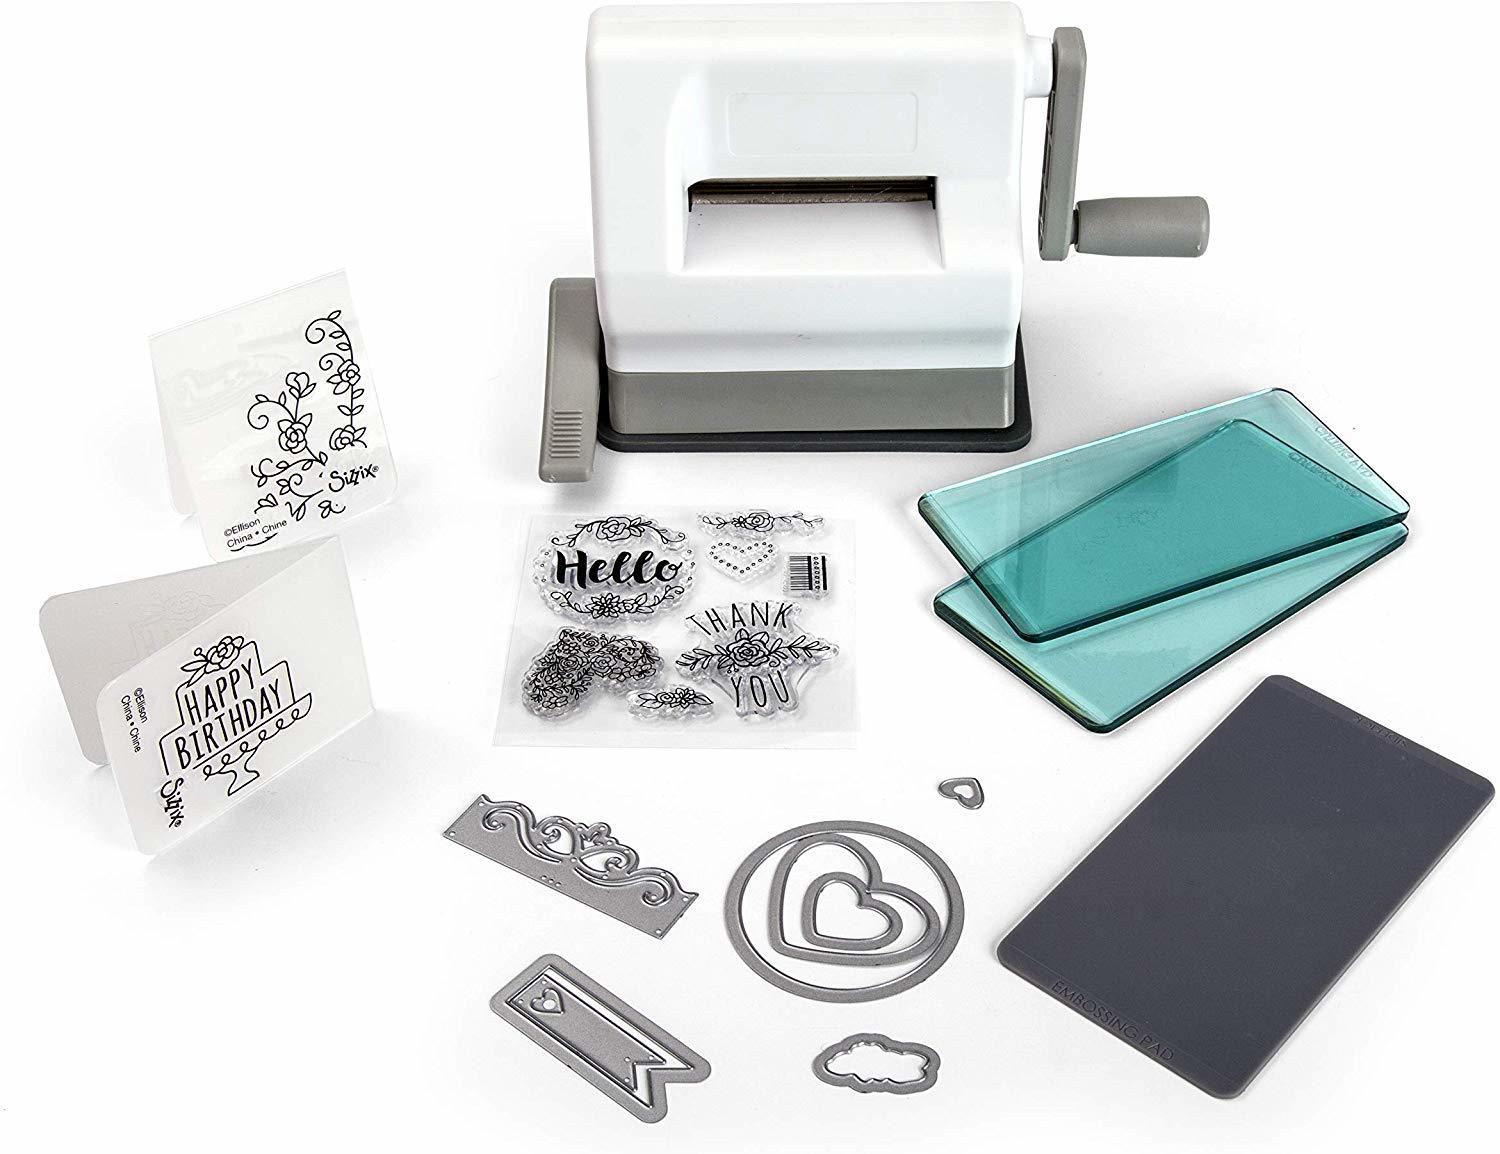 Sizzix Sidekick Starter Kit 661770 Portable Manual Die Cutting & Embossing Ma... - $99.99